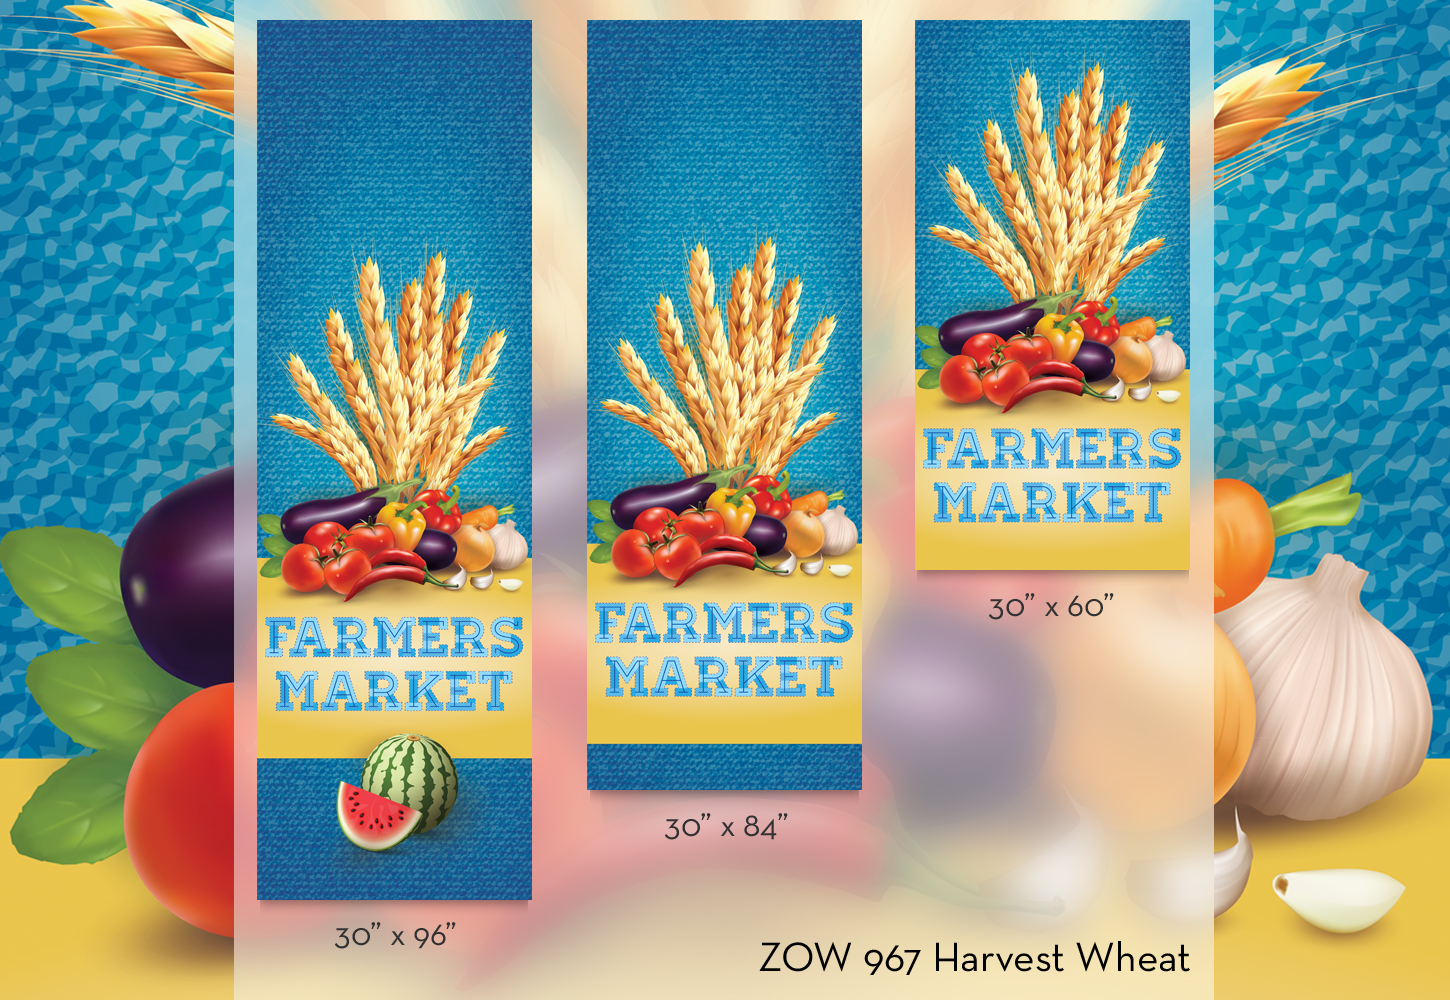 ZOW 967 Harvest Wheat